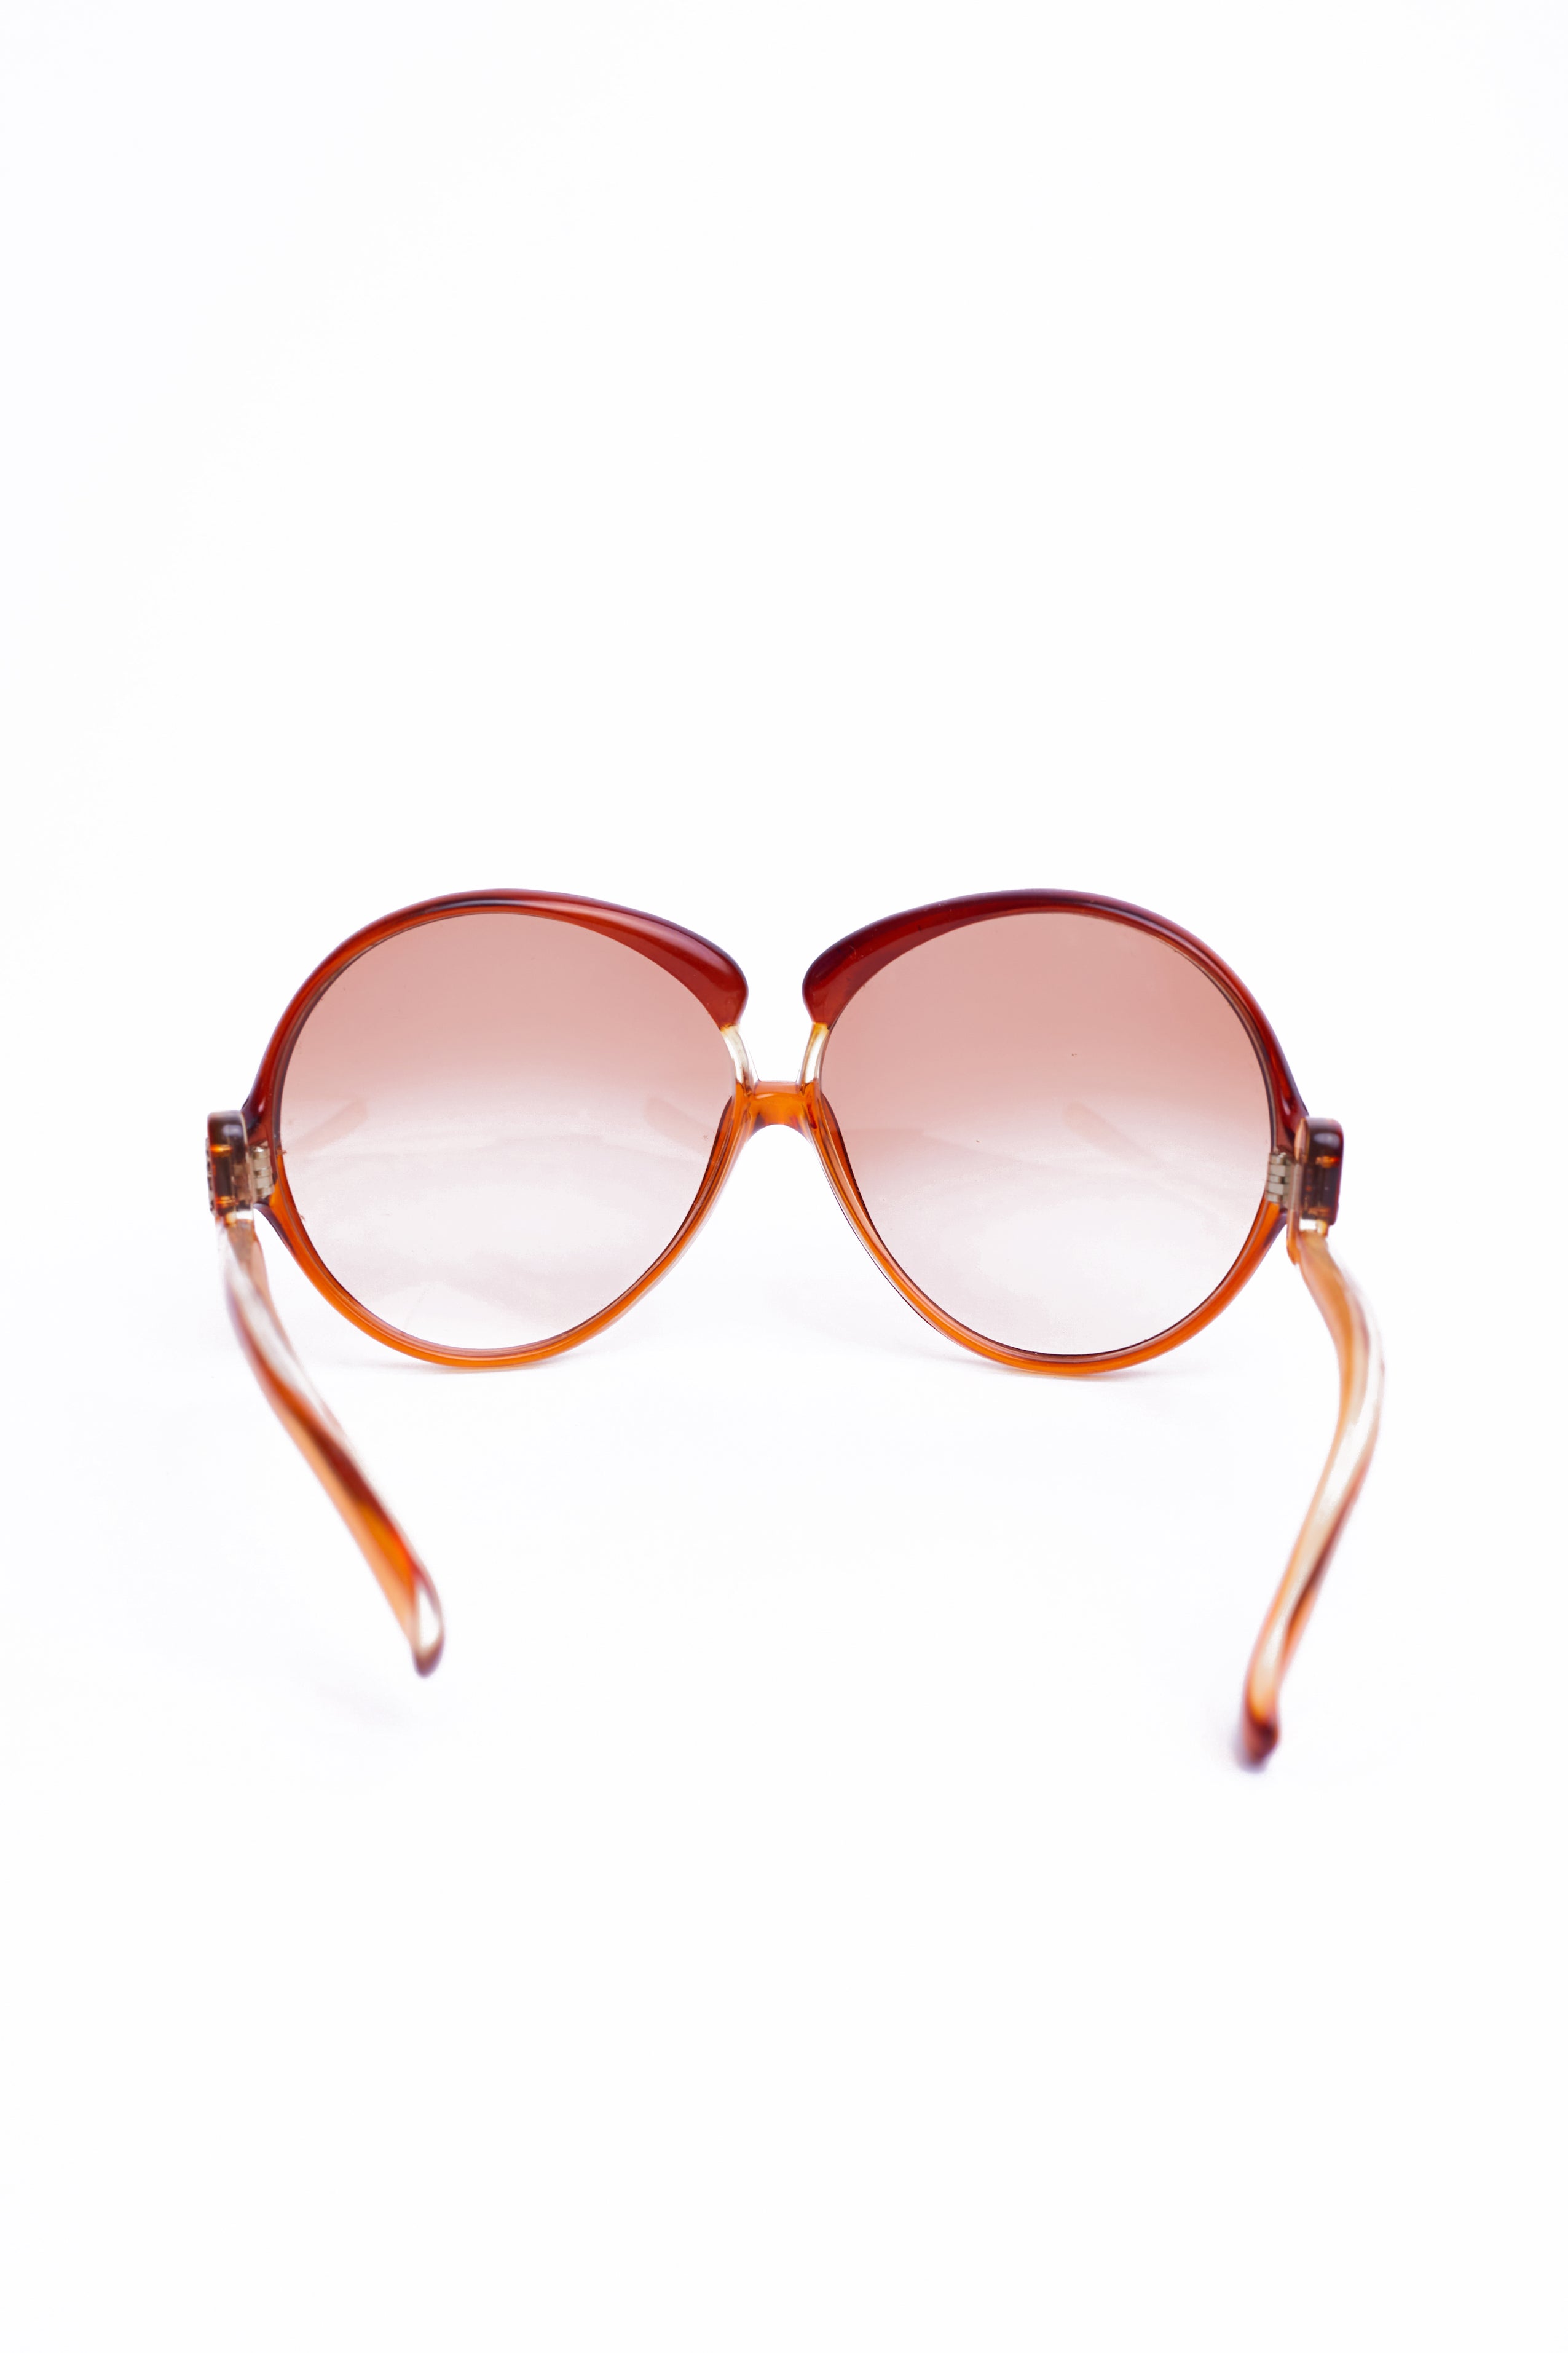 Yves Saint Laurent <br> S/S 1978 deadstock oversized peach and mahogany frame YSL logo arm sunglasses 7773